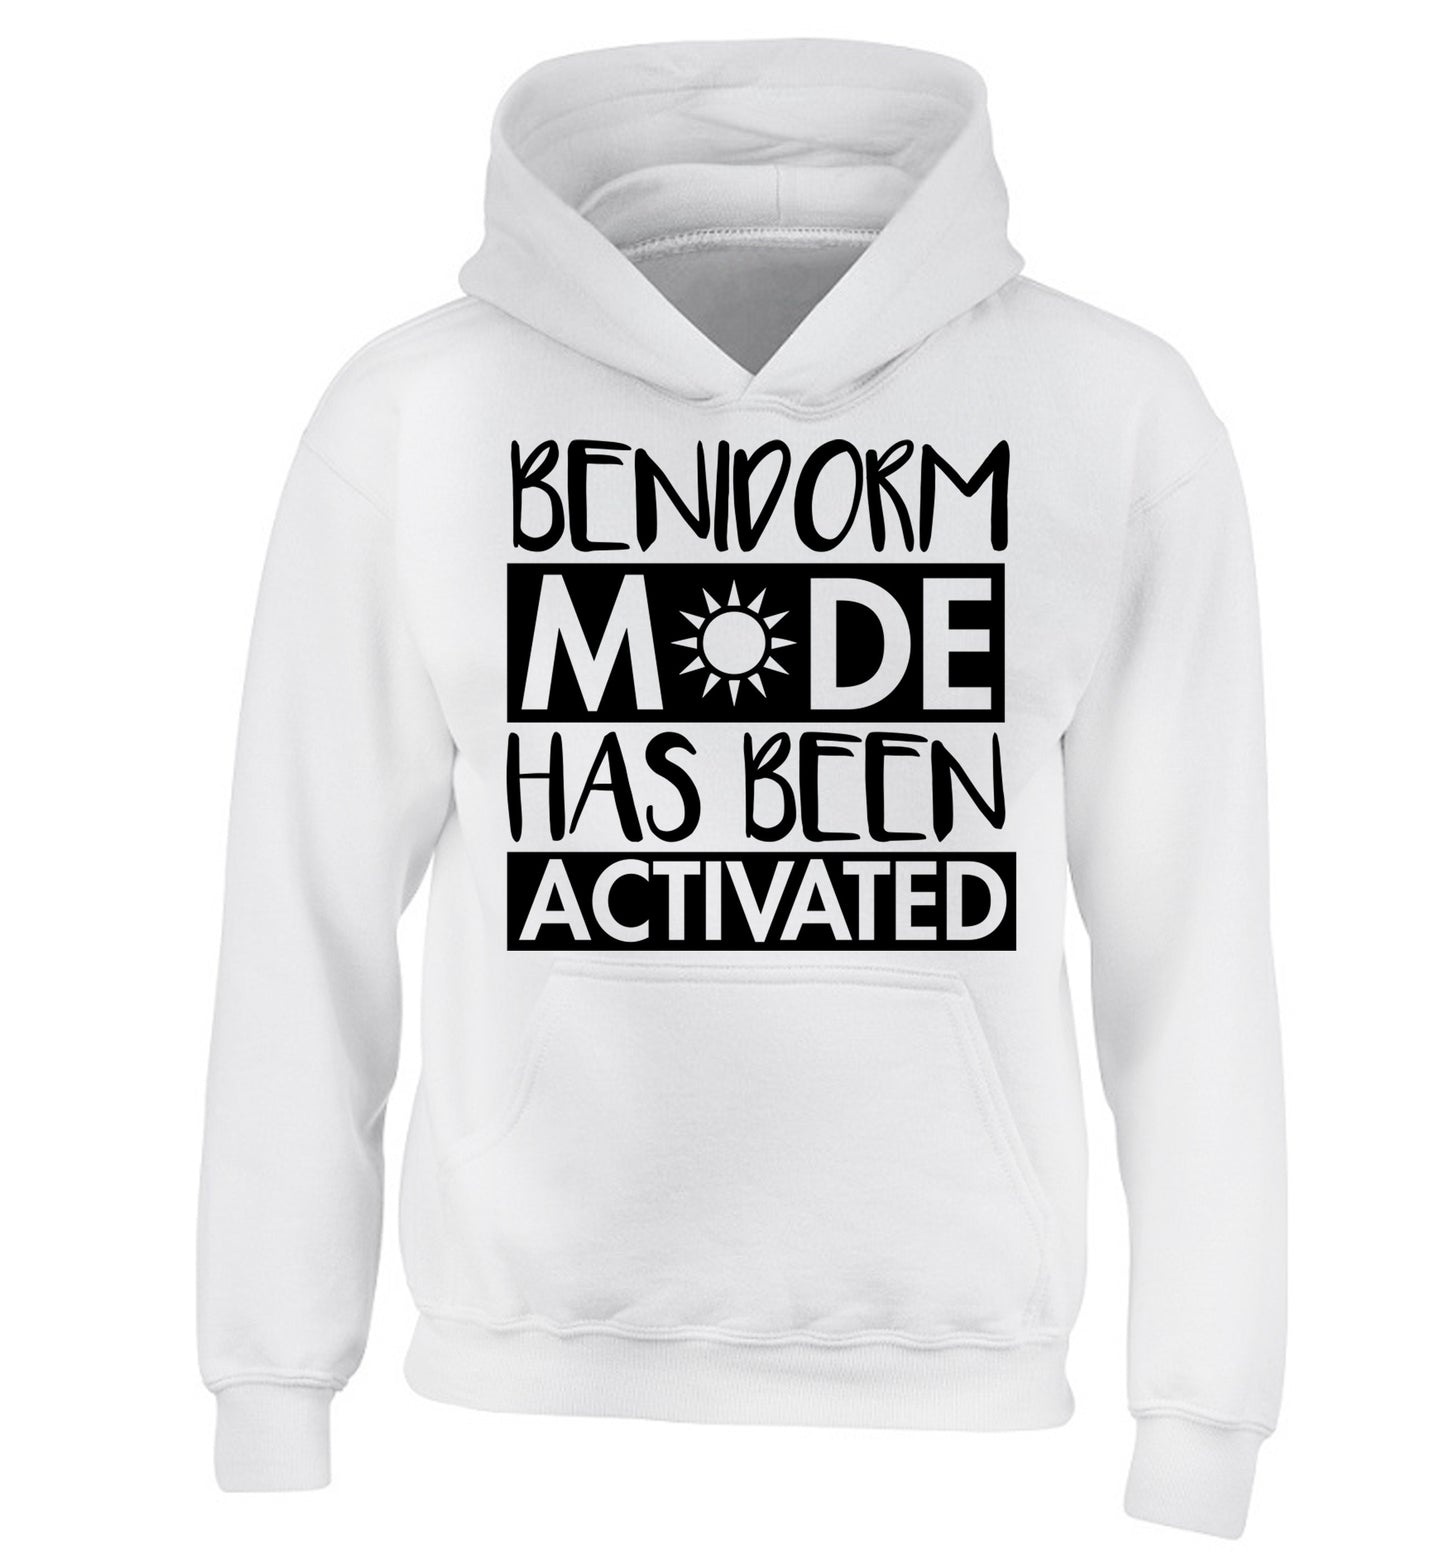 Benidorm mode has been activated children's white hoodie 12-14 Years